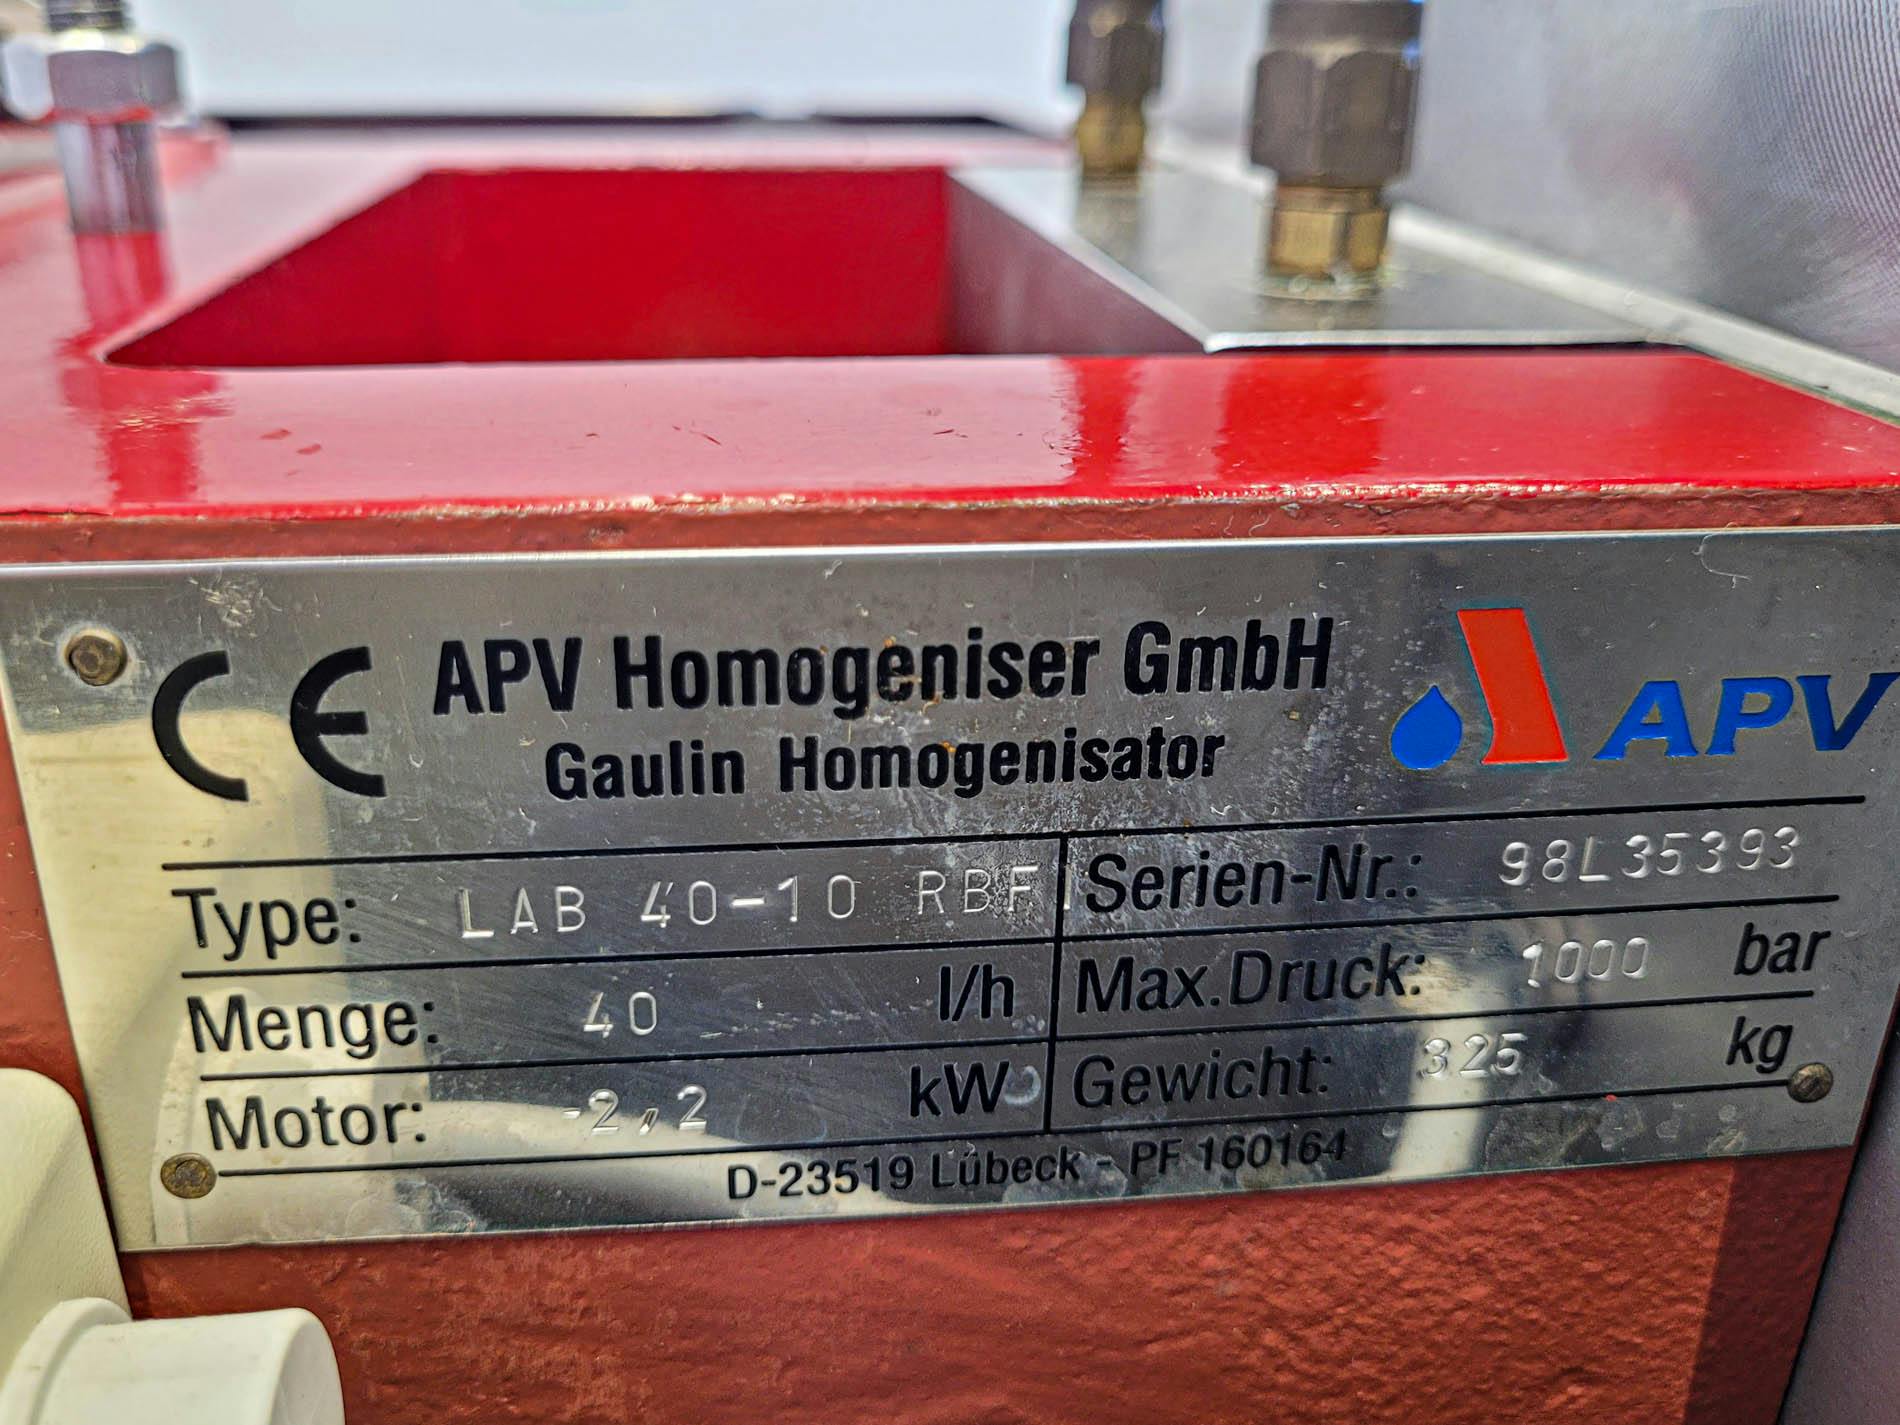 APV Homogeniser LAB 40-10 RBFI - Plunjer homogenisator - image 7